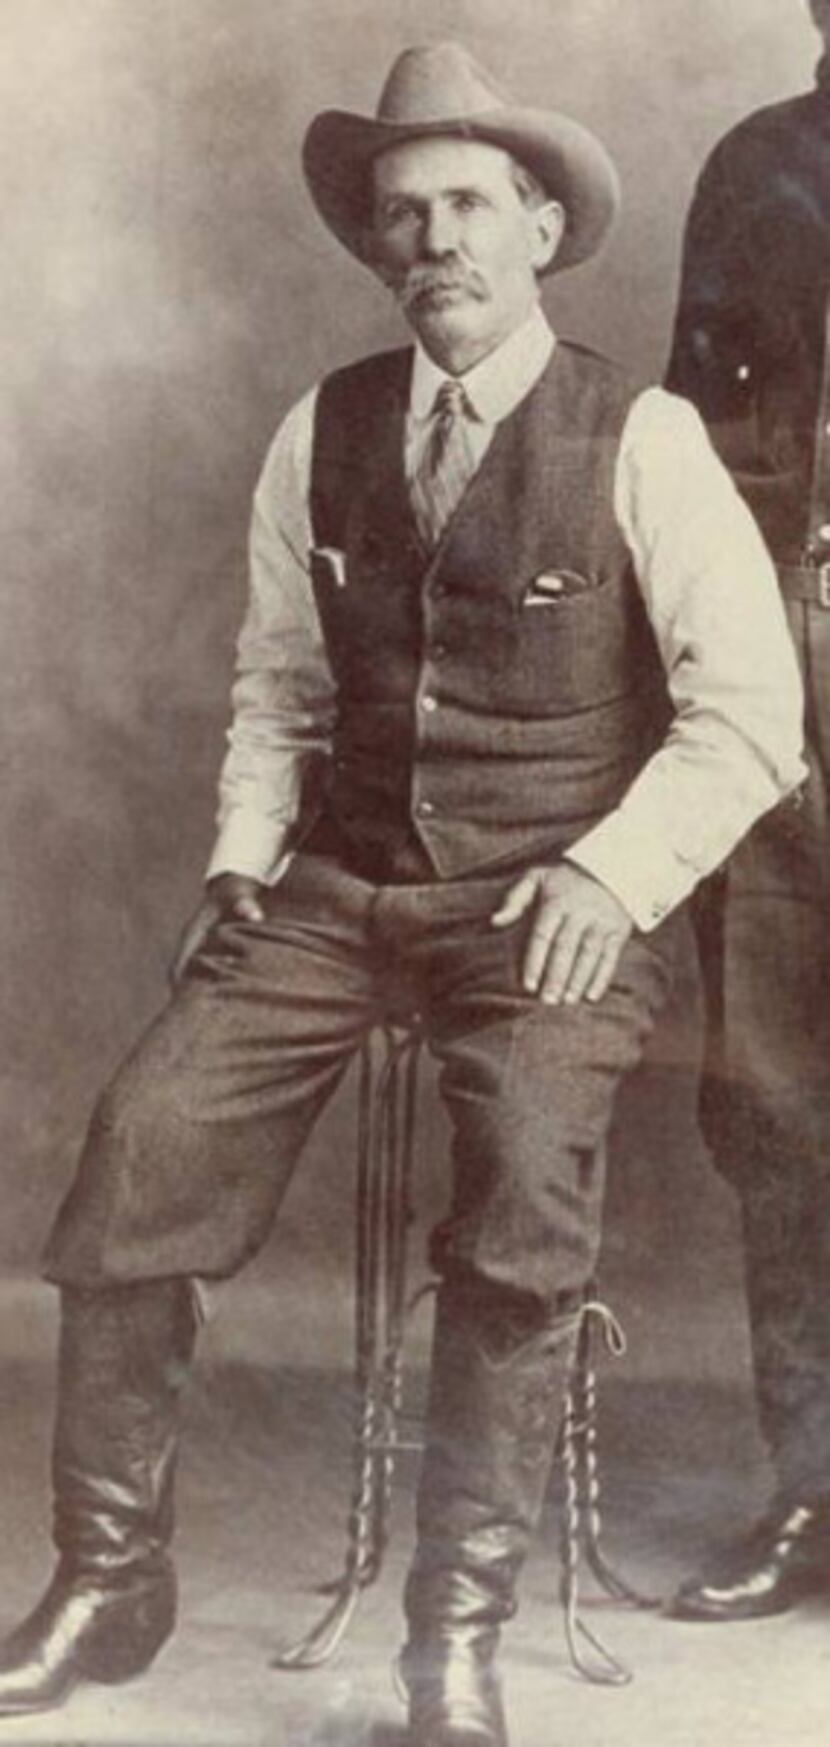 J. Frank Norfleet as a young man.